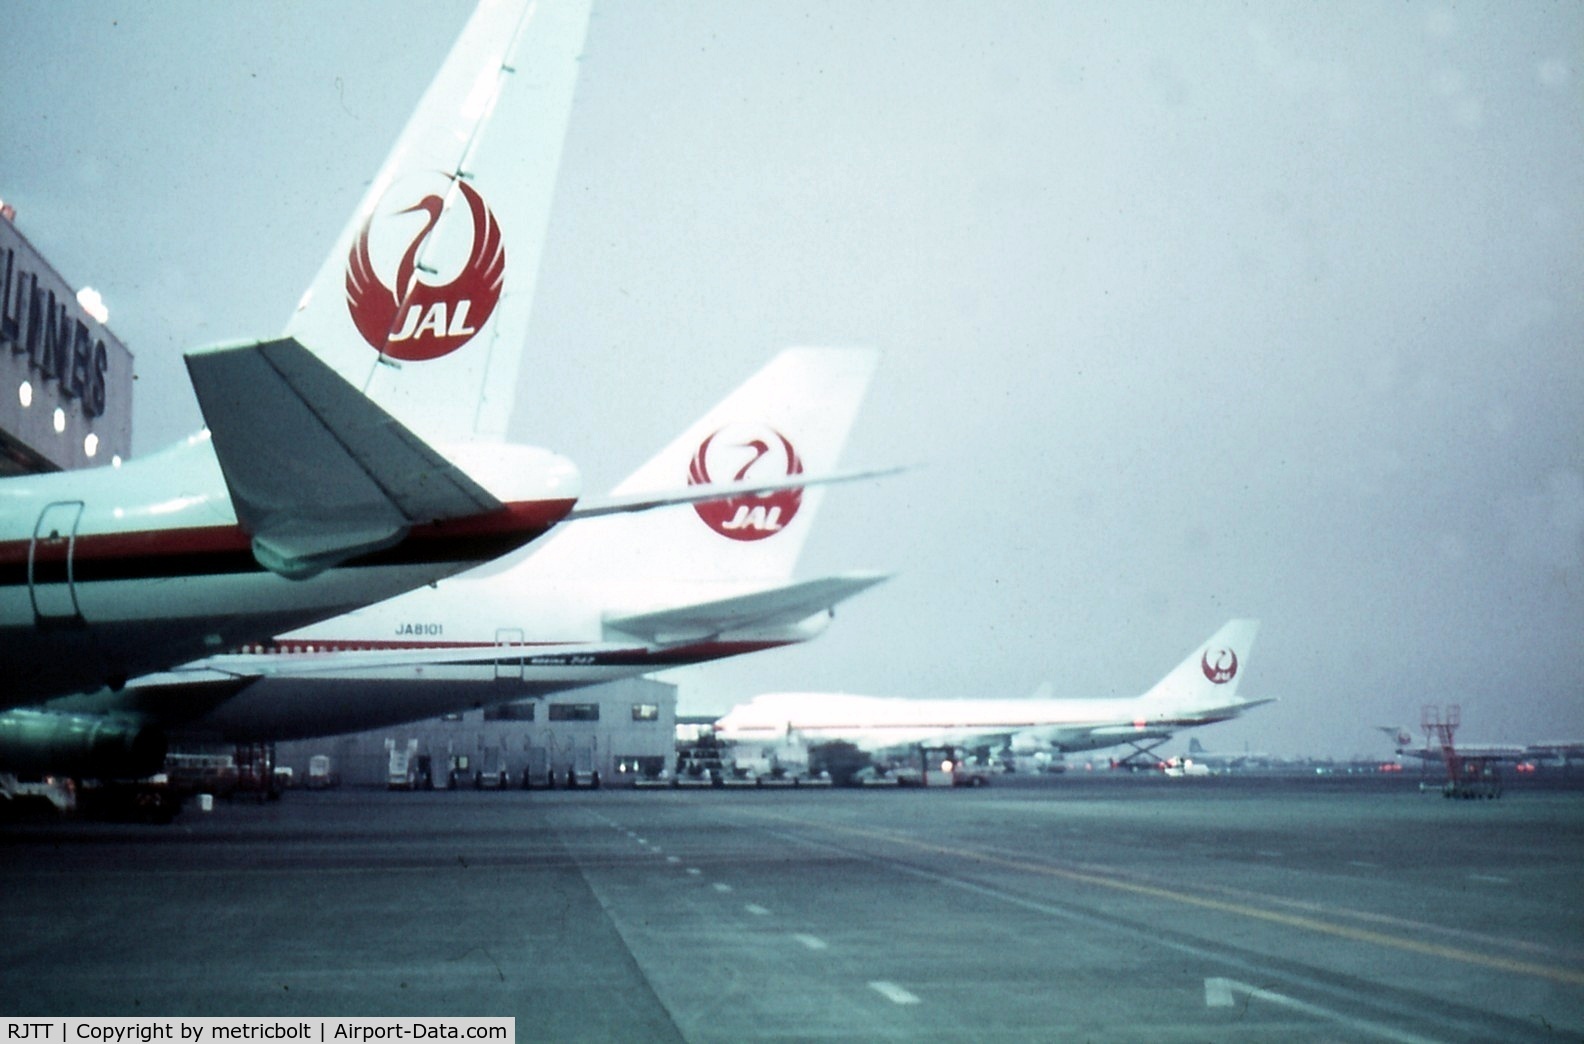 Tokyo International Airport (Haneda), Ota, Tokyo Japan (RJTT) - Japan Airlines Maintenance base in May 1971